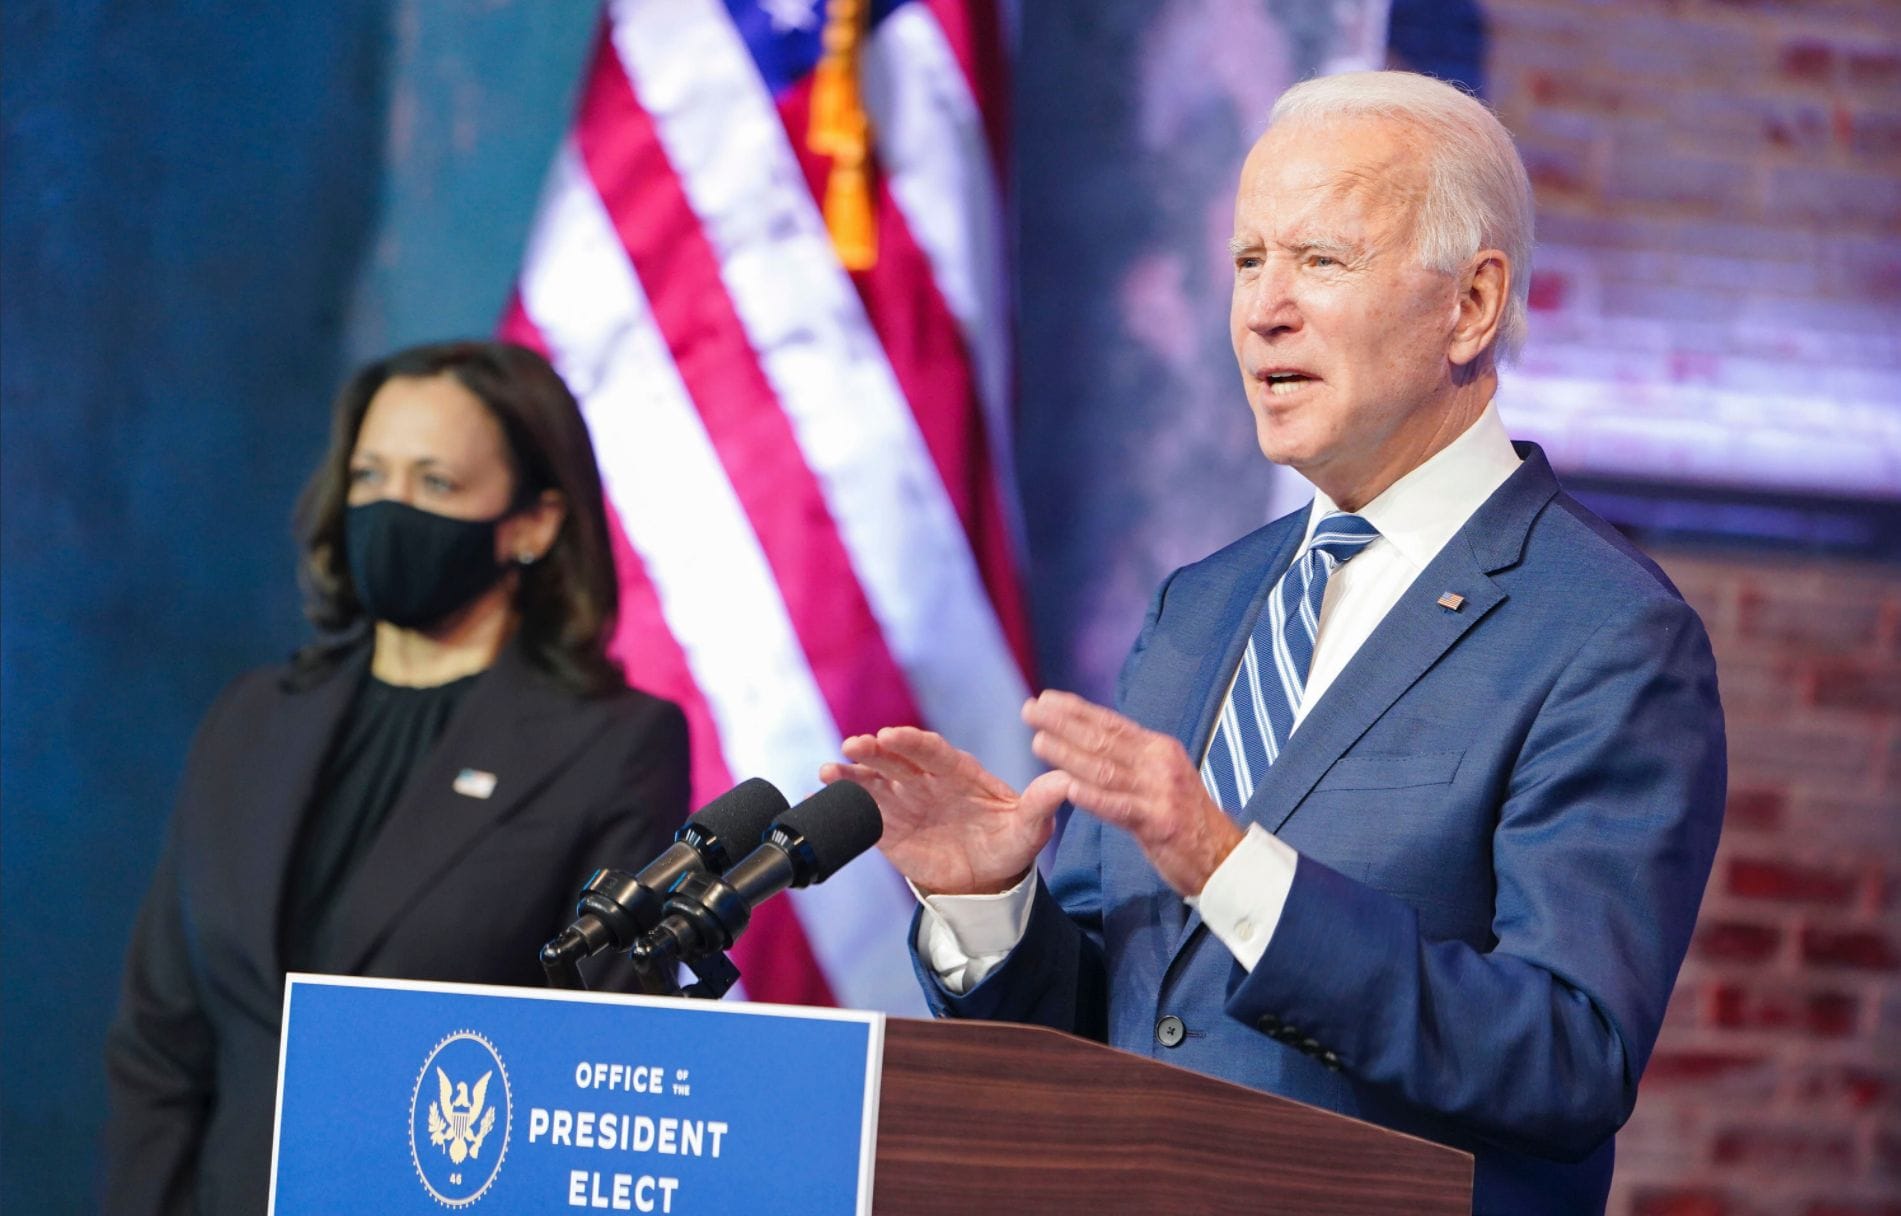 Biden and Harris Speak About Immigration in 2021